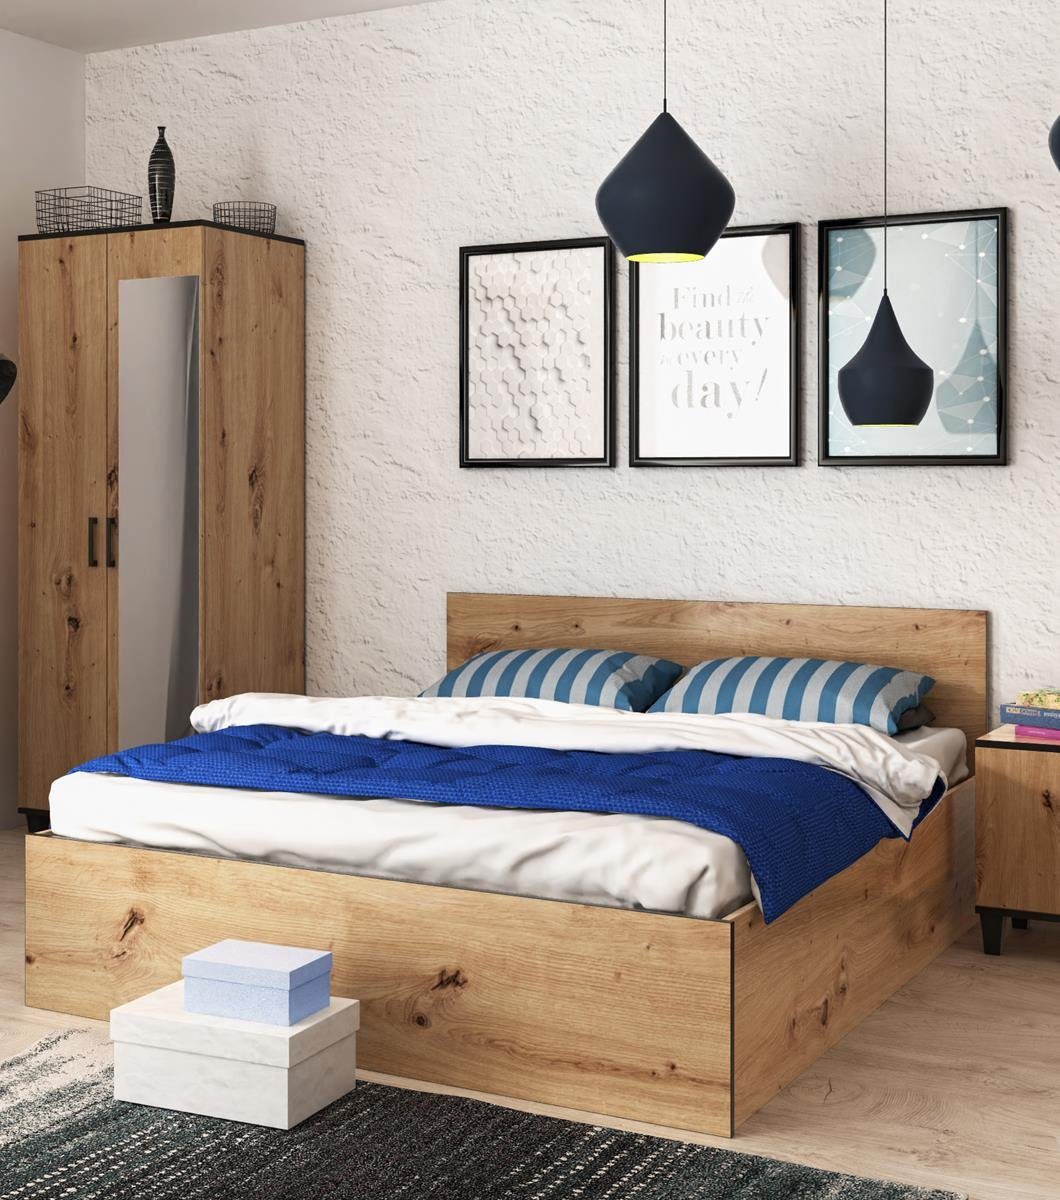 Beautysofa Holzbett C10, mit Holzrahmen und Lattenrost, 160x200 cm Bett, im  Loft Stil, inklusive Bettkasten